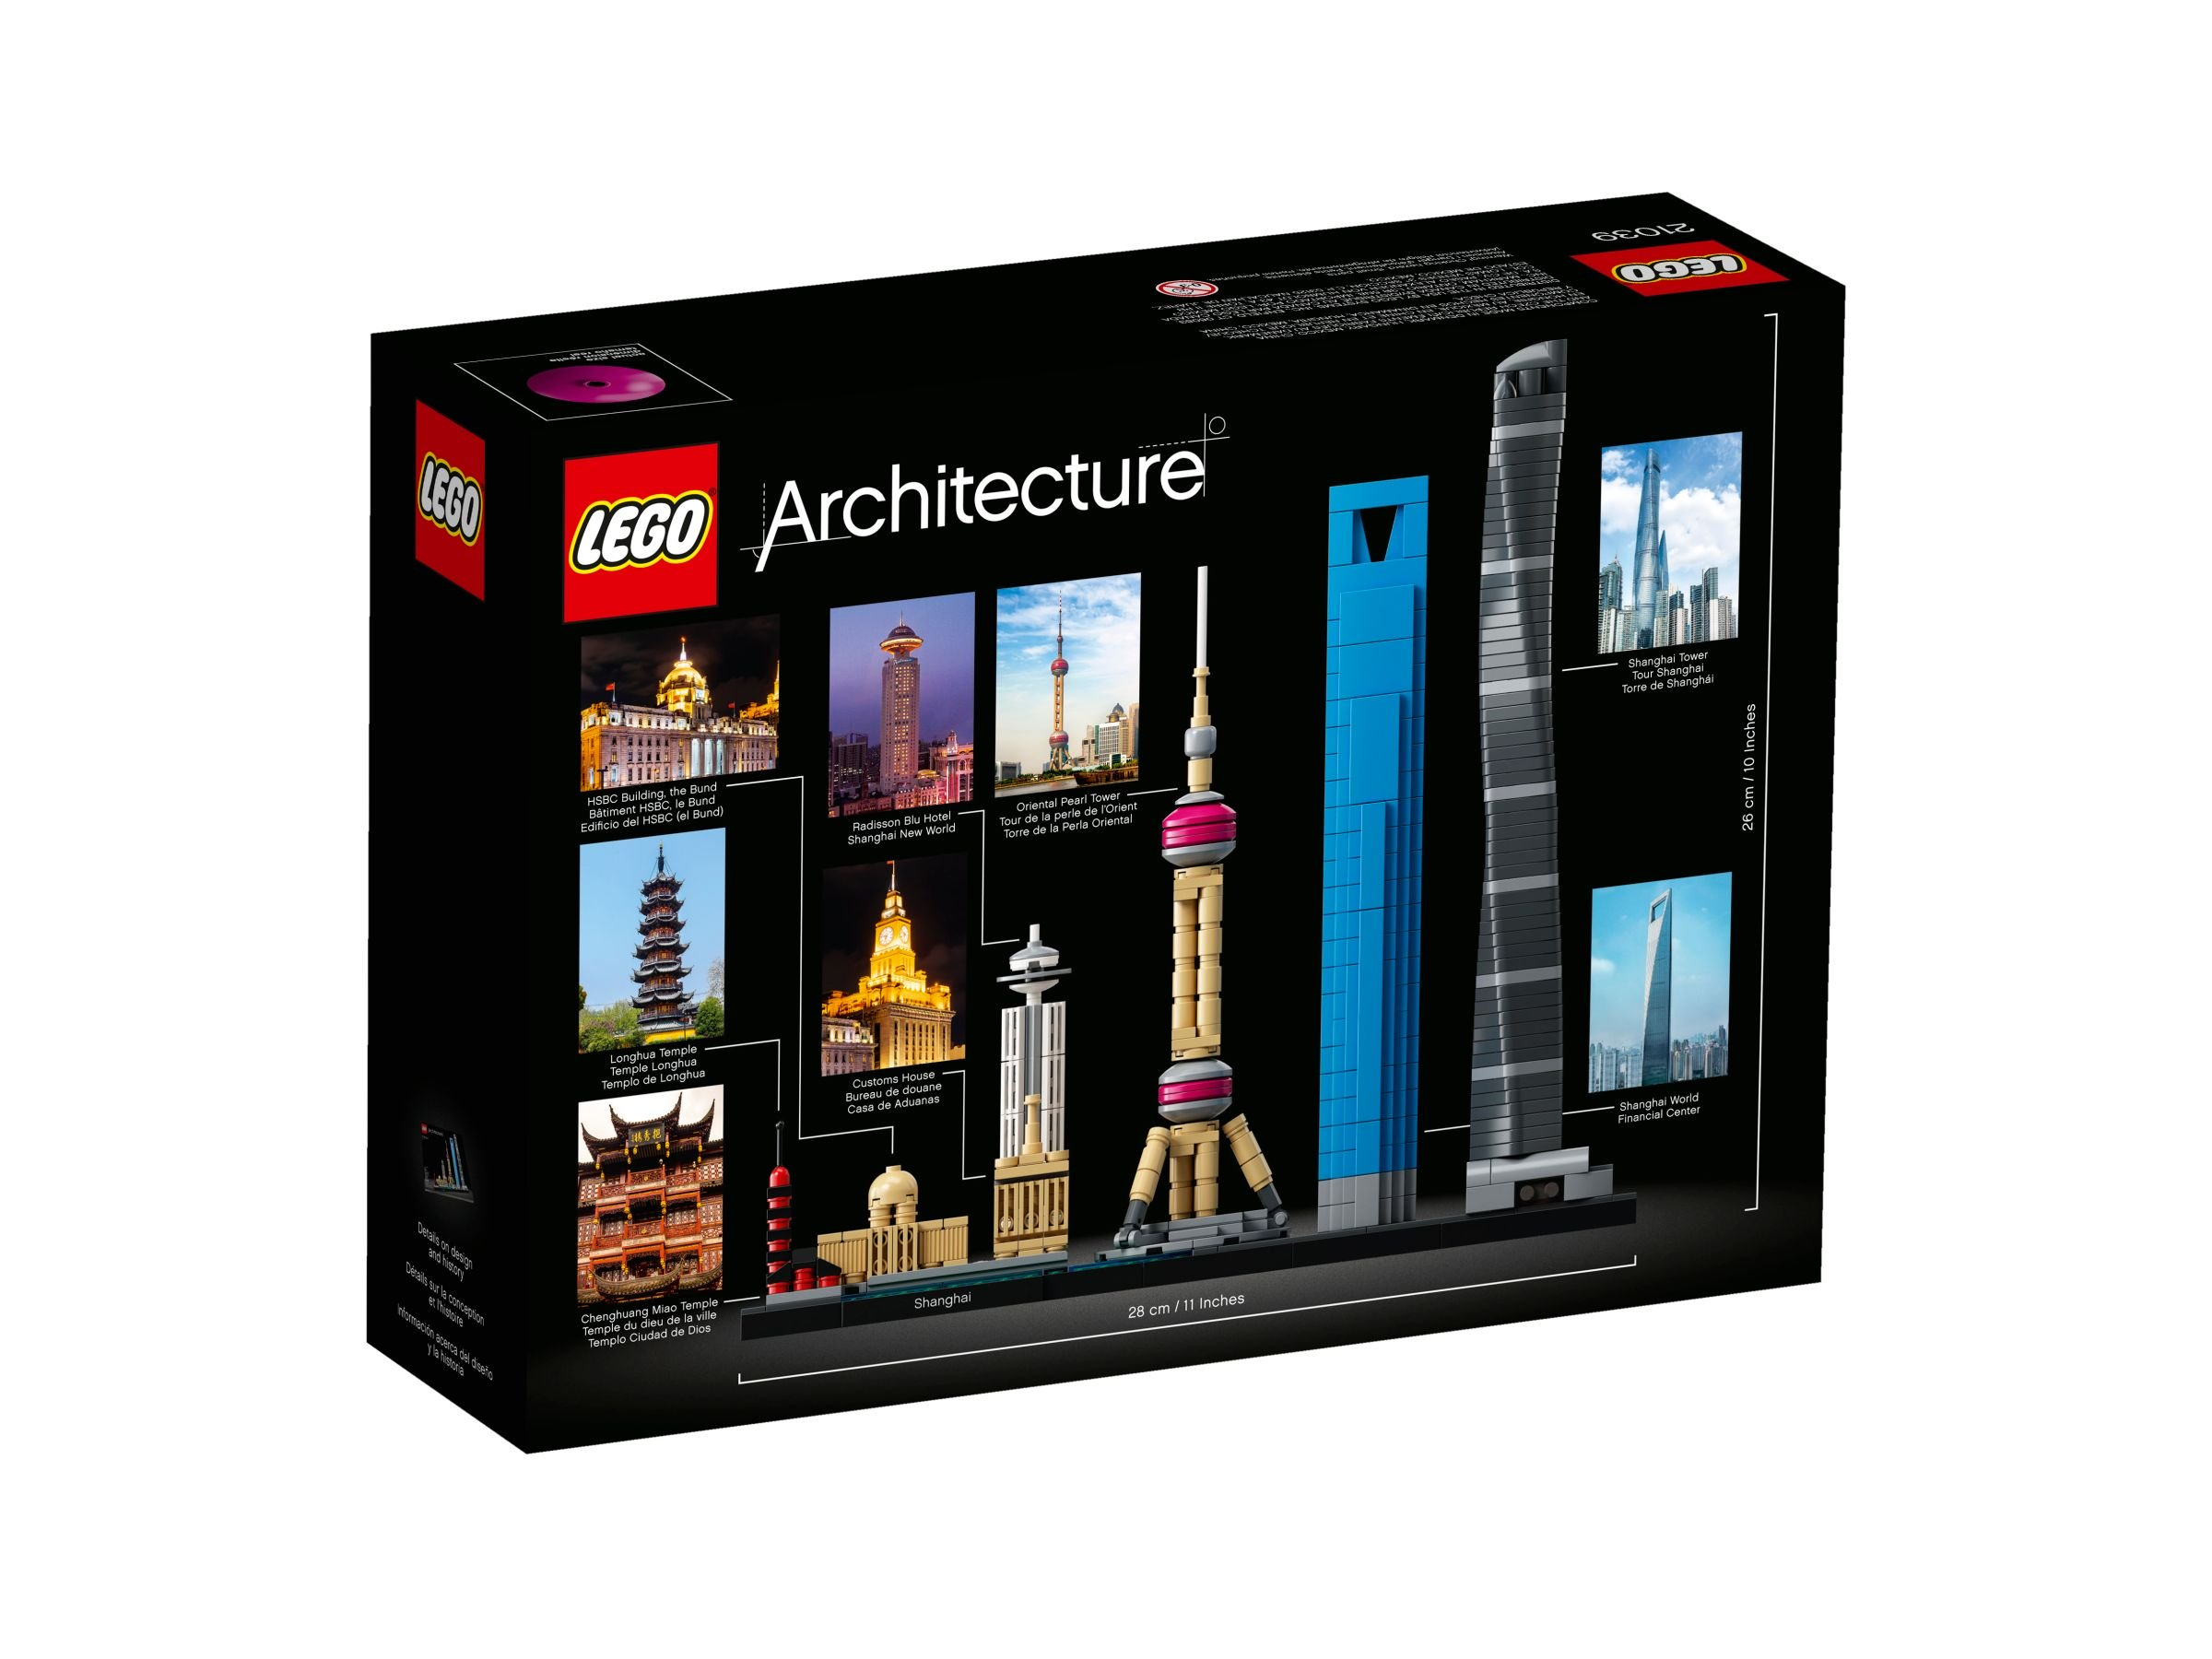 Bausatz LEGO Architecture 21039 Shanghai